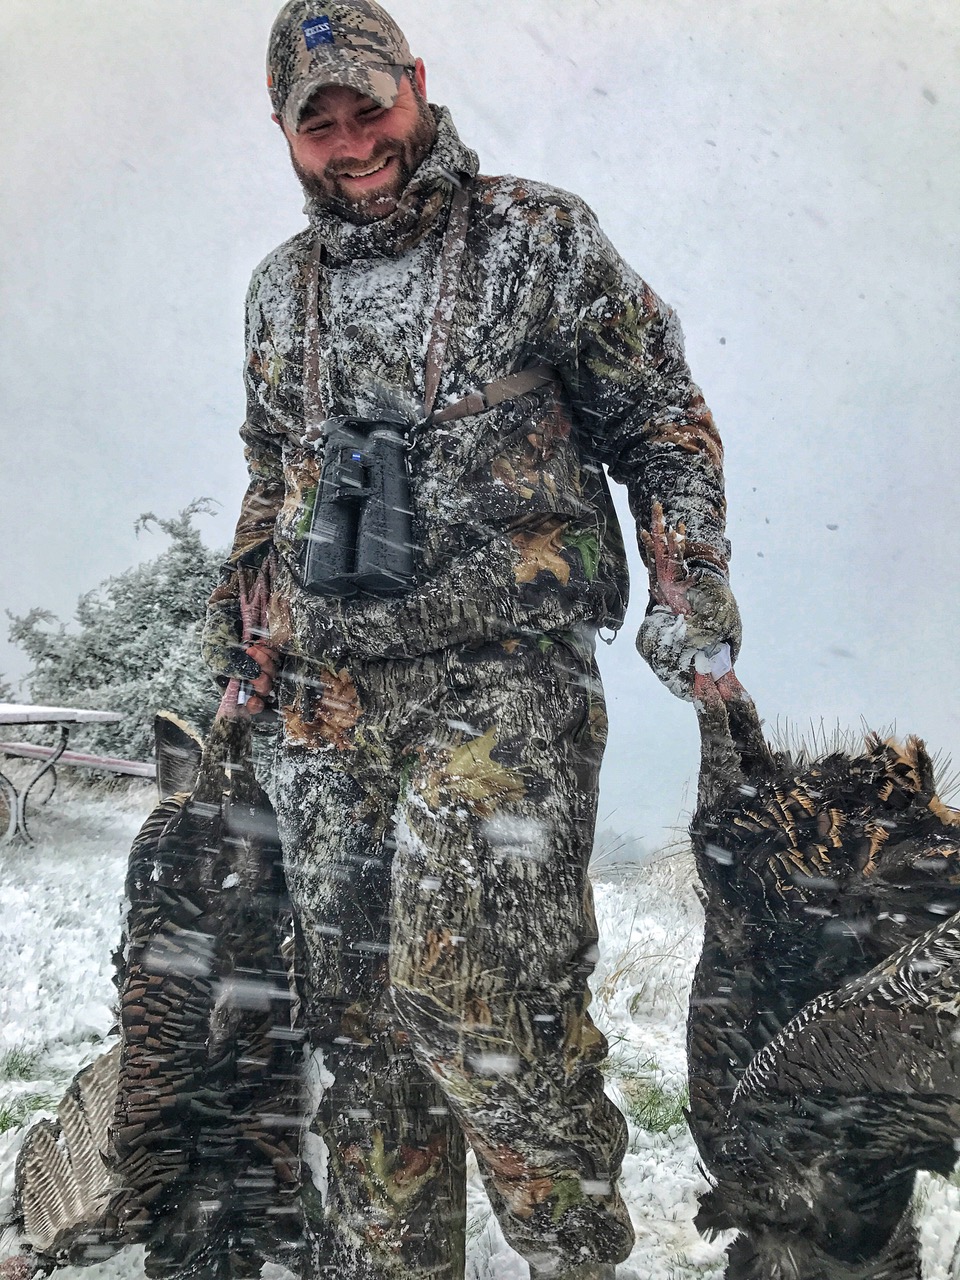 2019 Nebraska Wild Turkey | May 1- 5 | SOLD OUT!